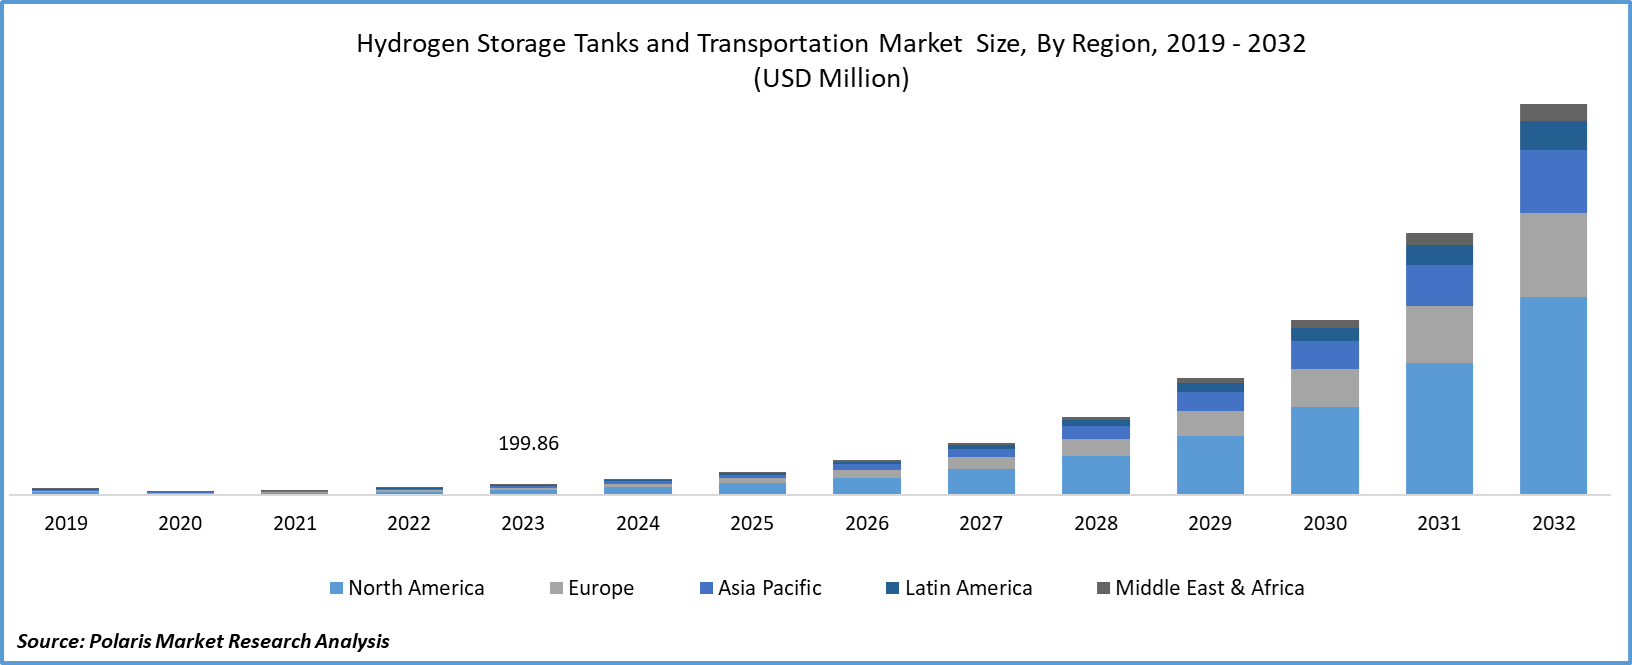 Hydrogen Storage Tanks and Transportation Market Size